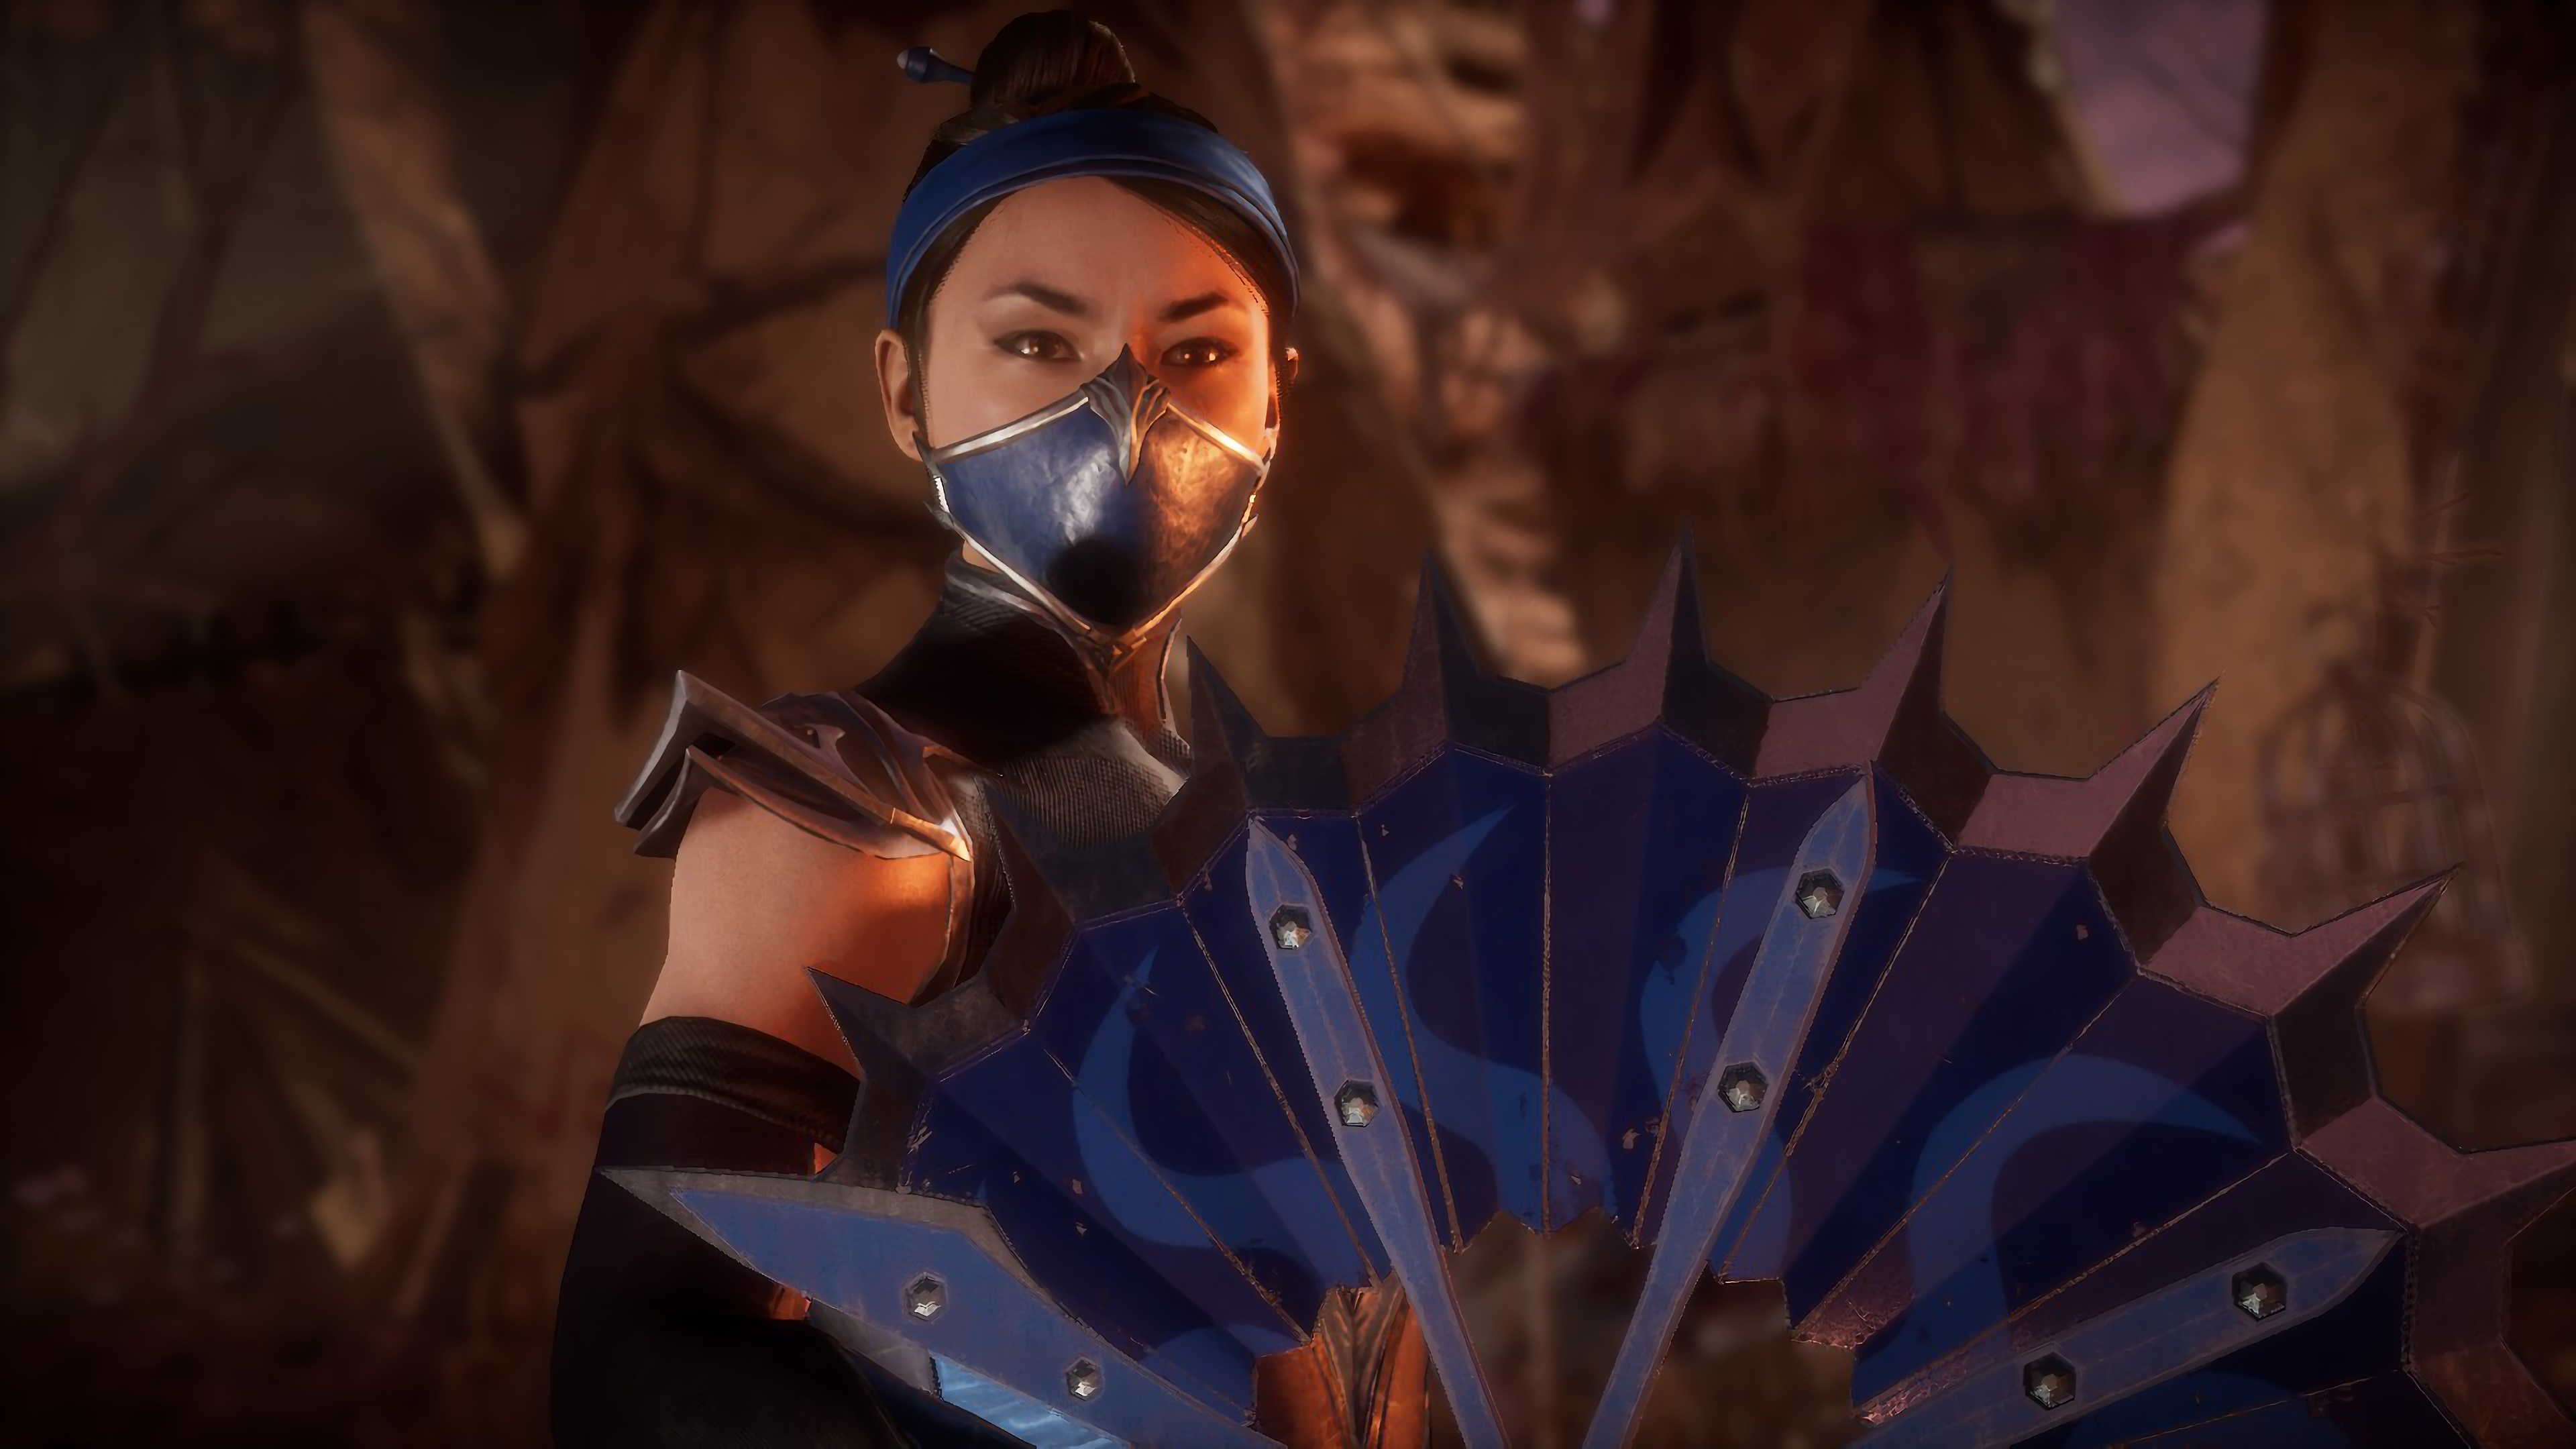 Kitana in Mortal Kombat 11 Wallpaper, HD Games 4K 